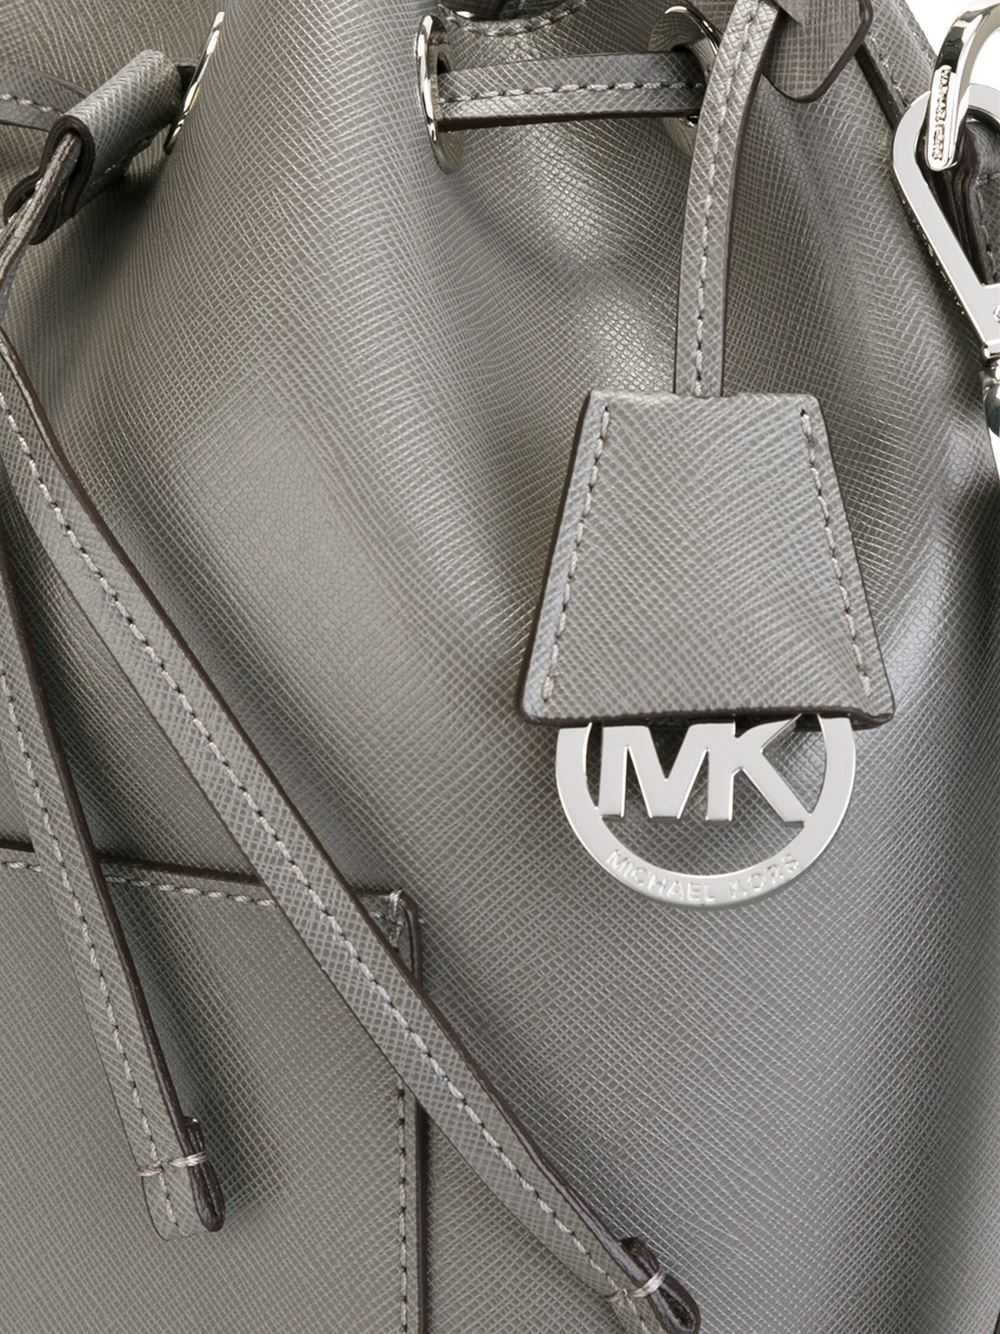 Michael Michael Kors Greenwich Medium Saffiano Leather Bucket Bag